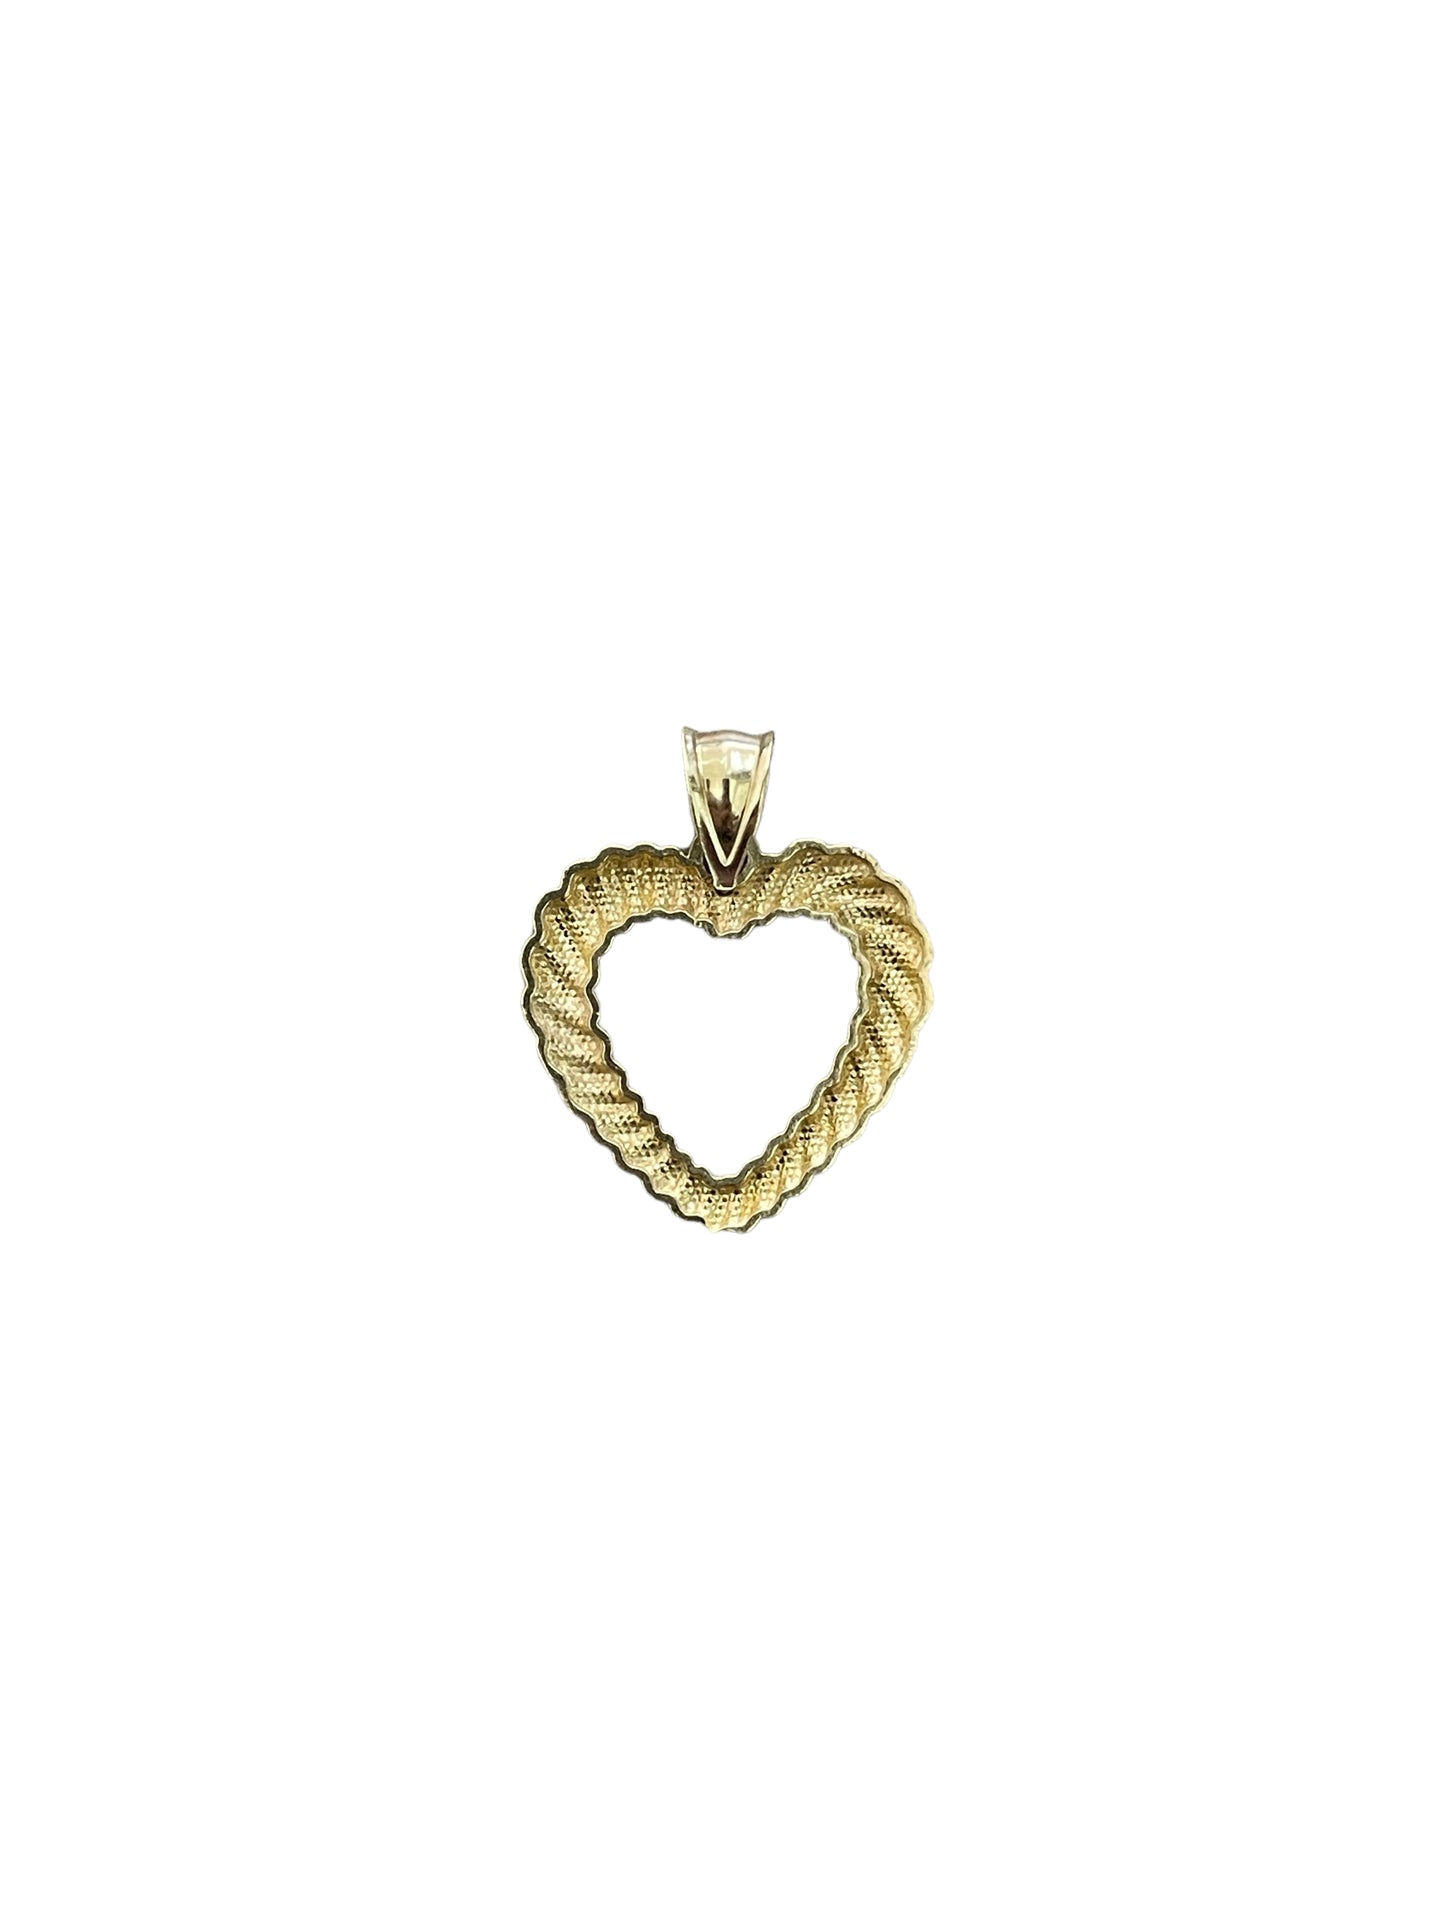 10K Yellow Gold Heart Charm (1.7 Grams)